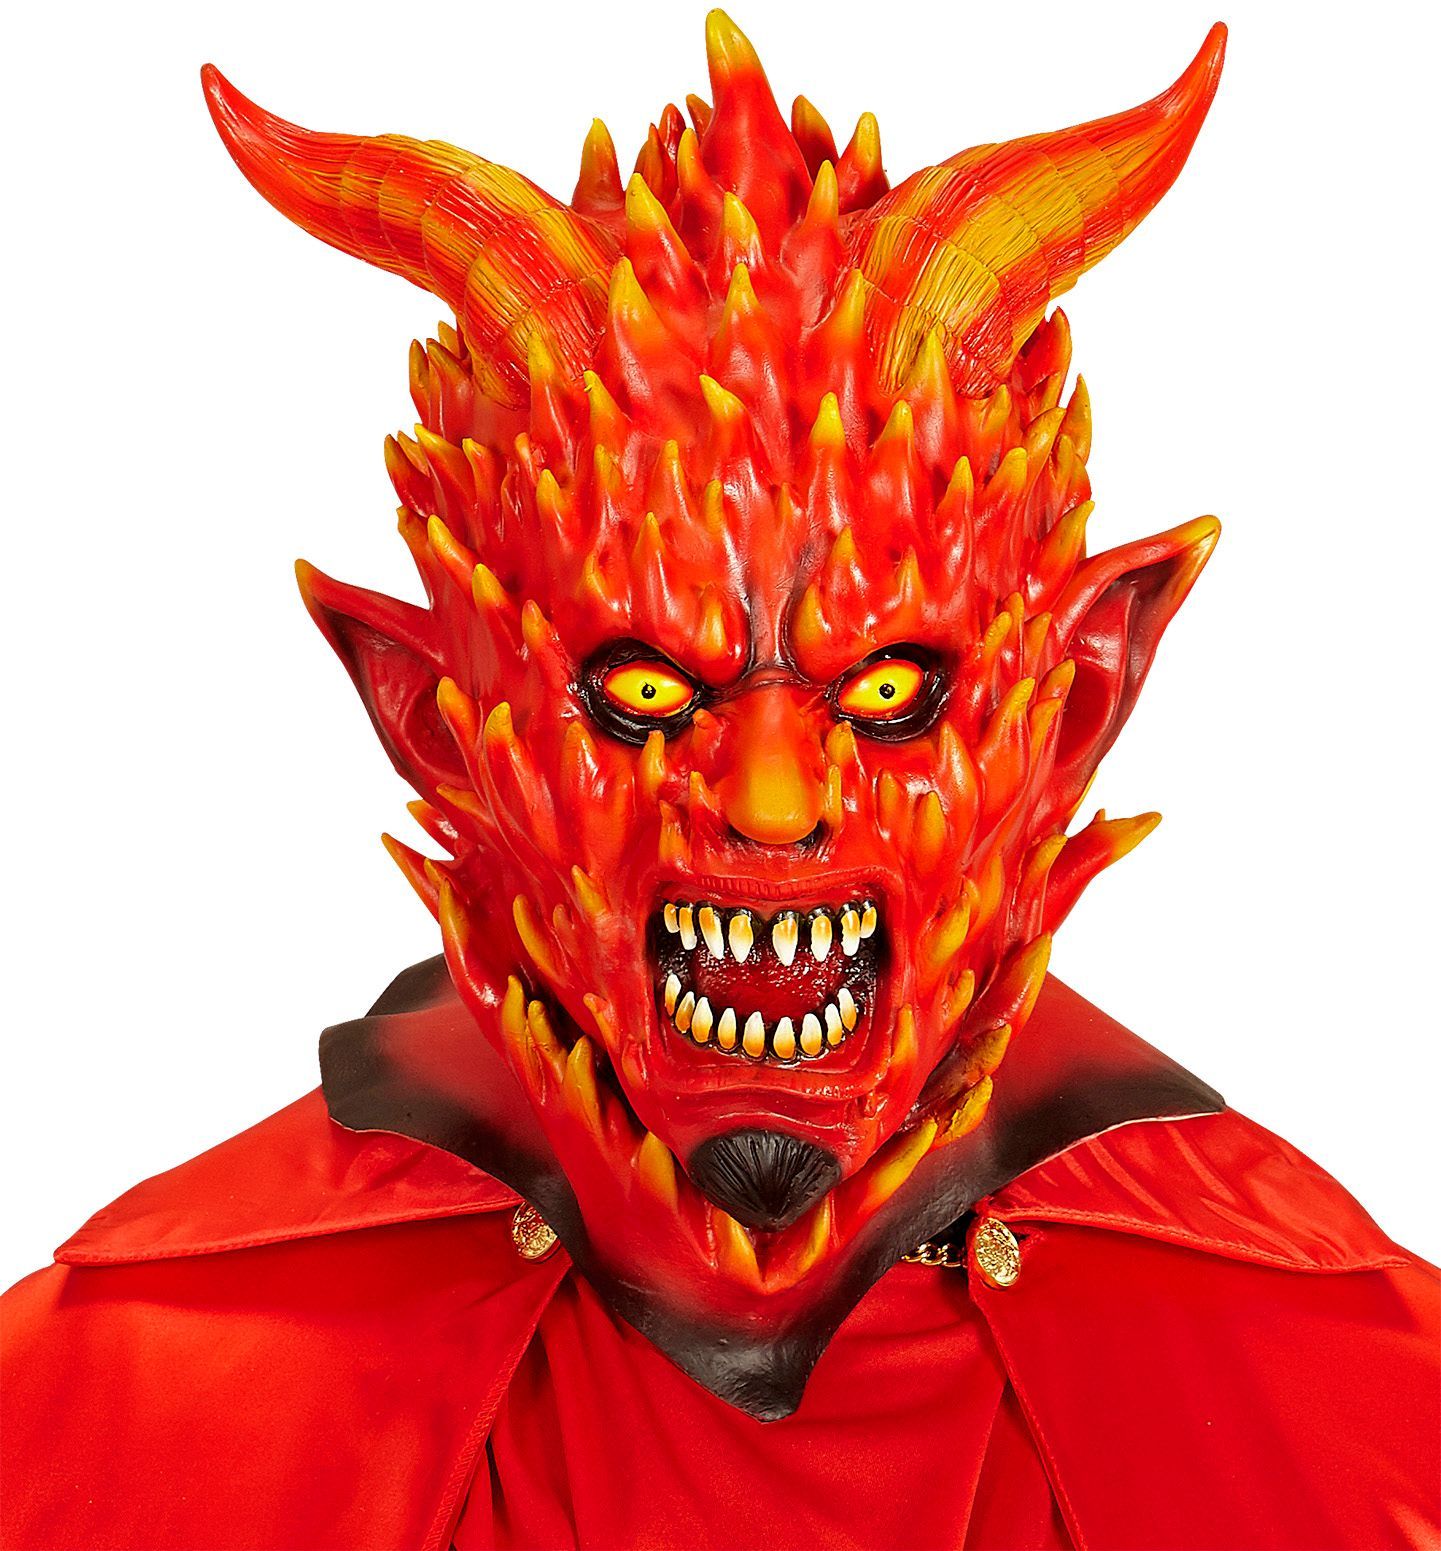 Rode duivel masker